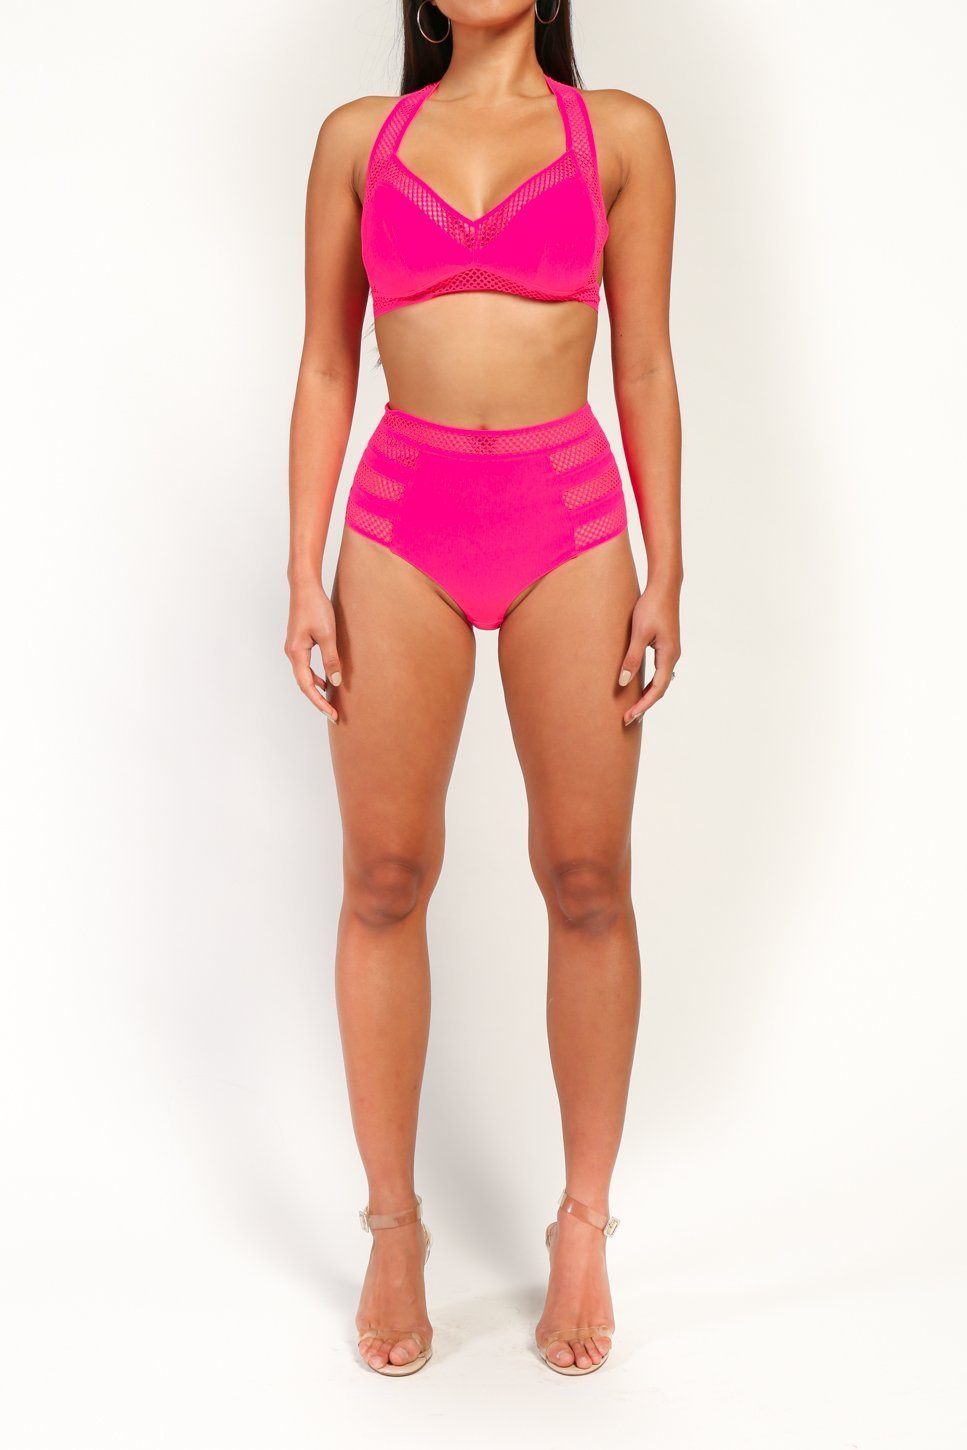 S.S High Waisted Bikini Set - SurgeStyle Boutique